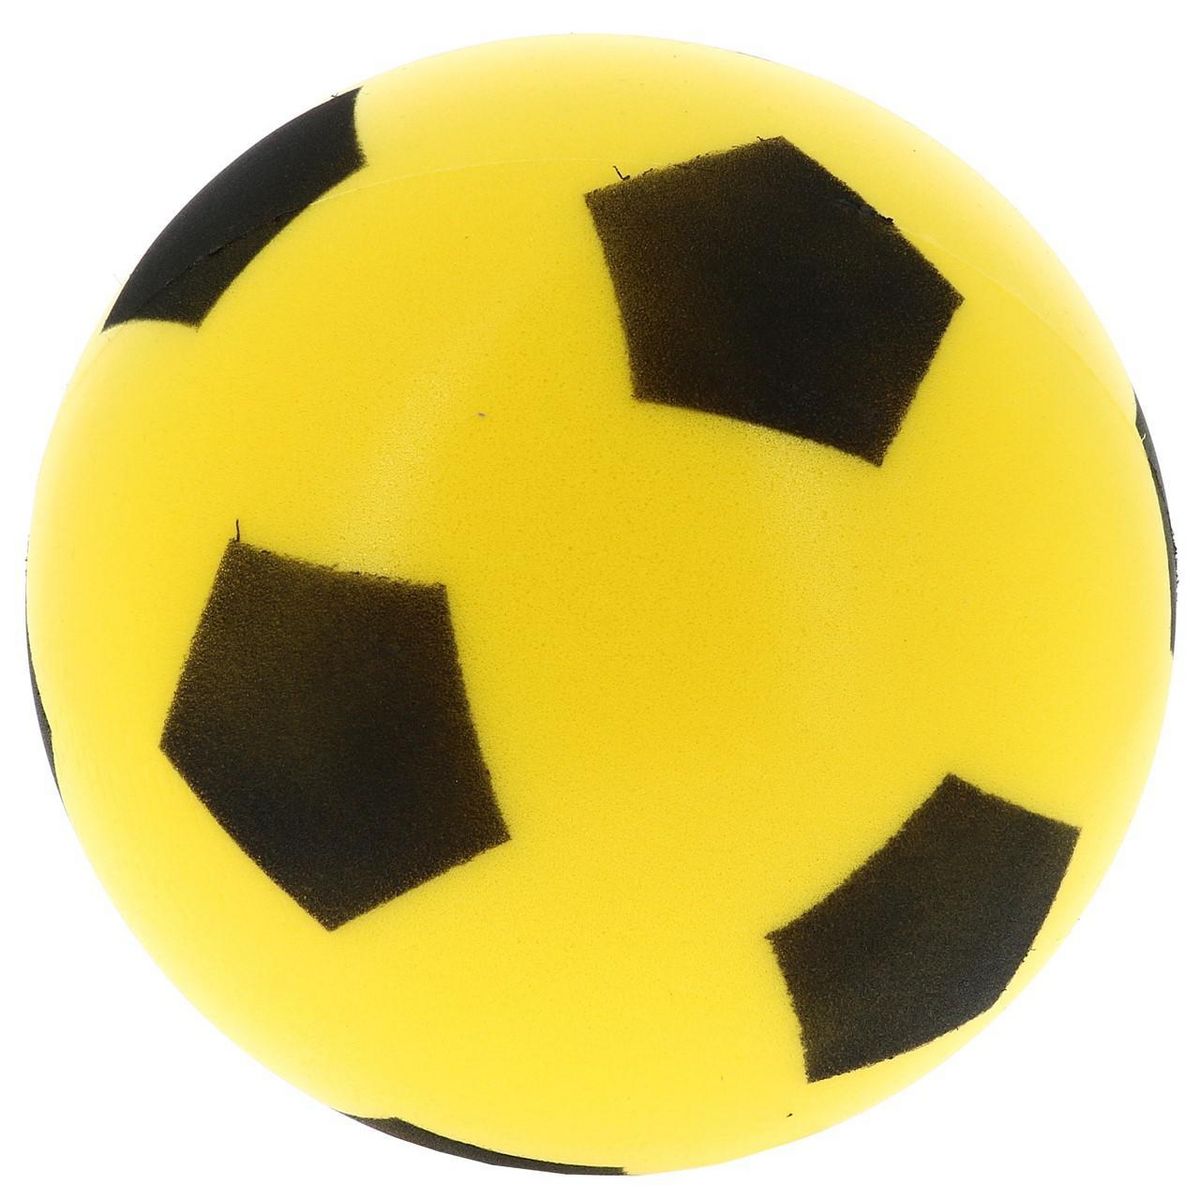 Ballon Football mousse dynamique Sporti France 067233 - 067208